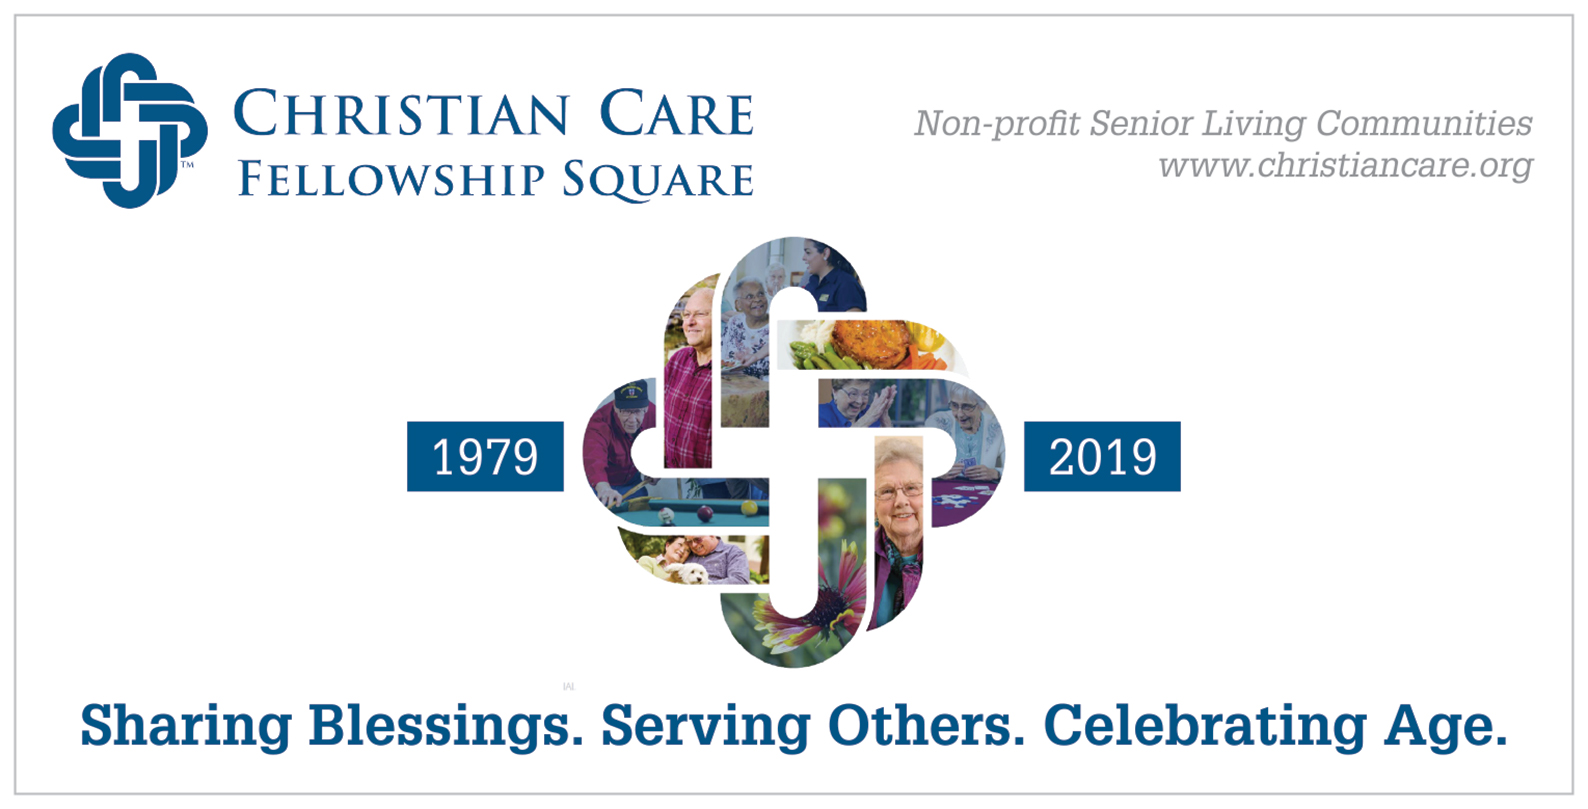 Christian Care Foundation